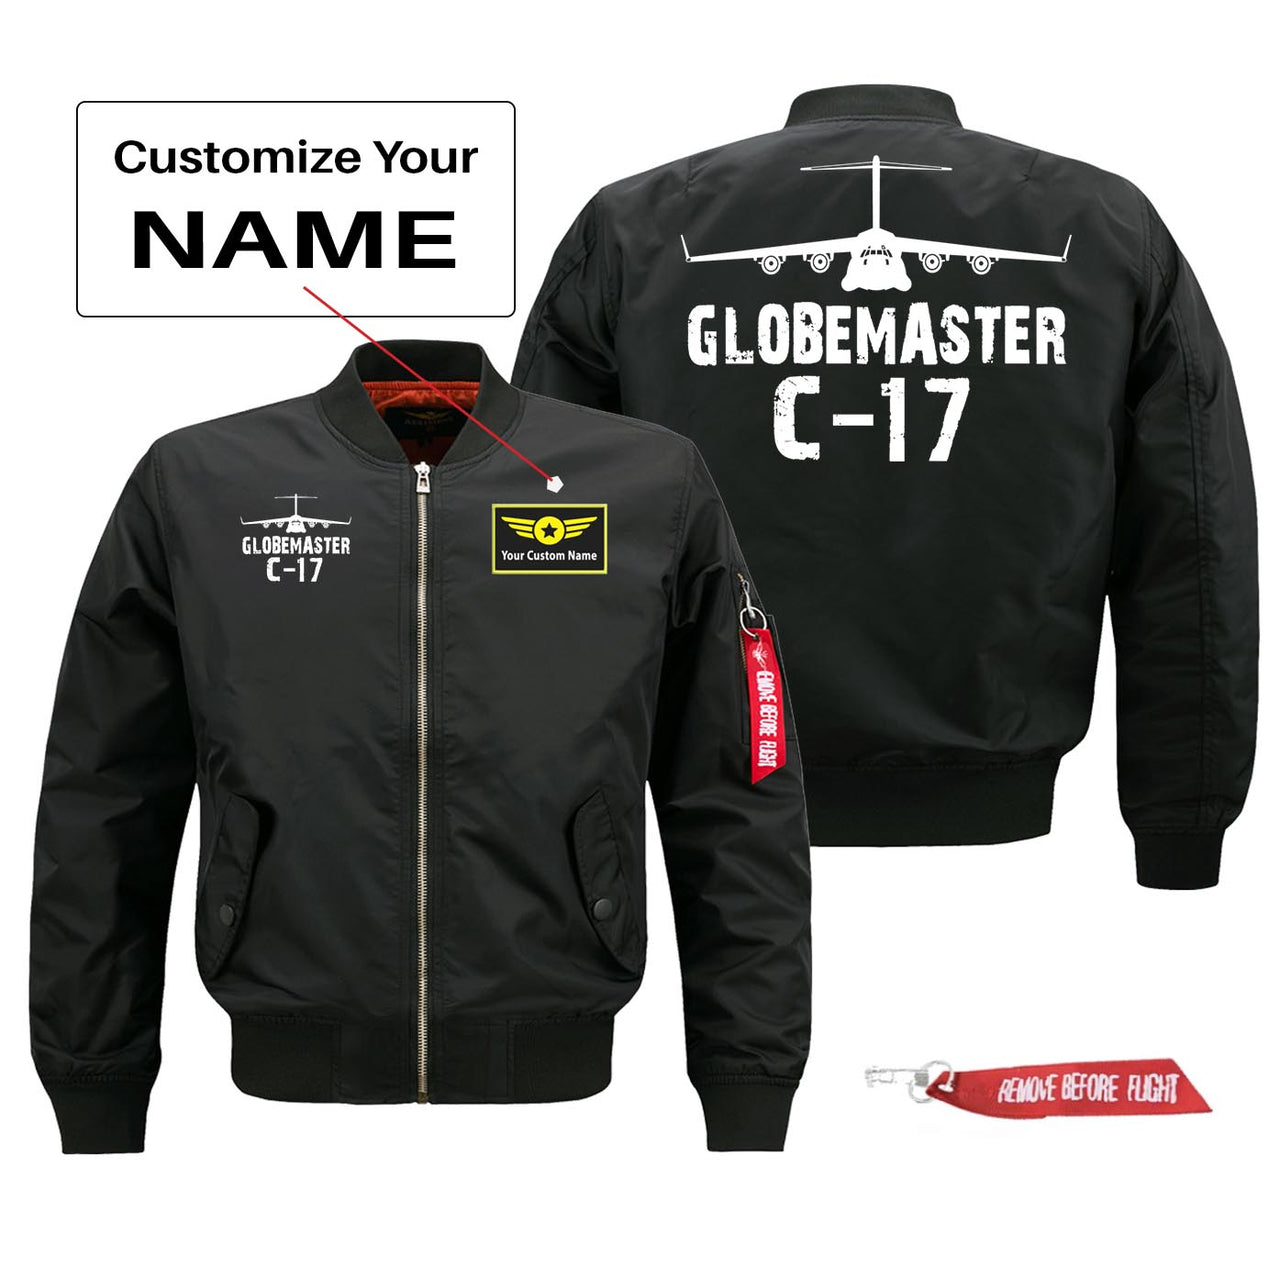 GlobeMaster C-17 Silhouette & Designed Pilot Jackets (Customizable)